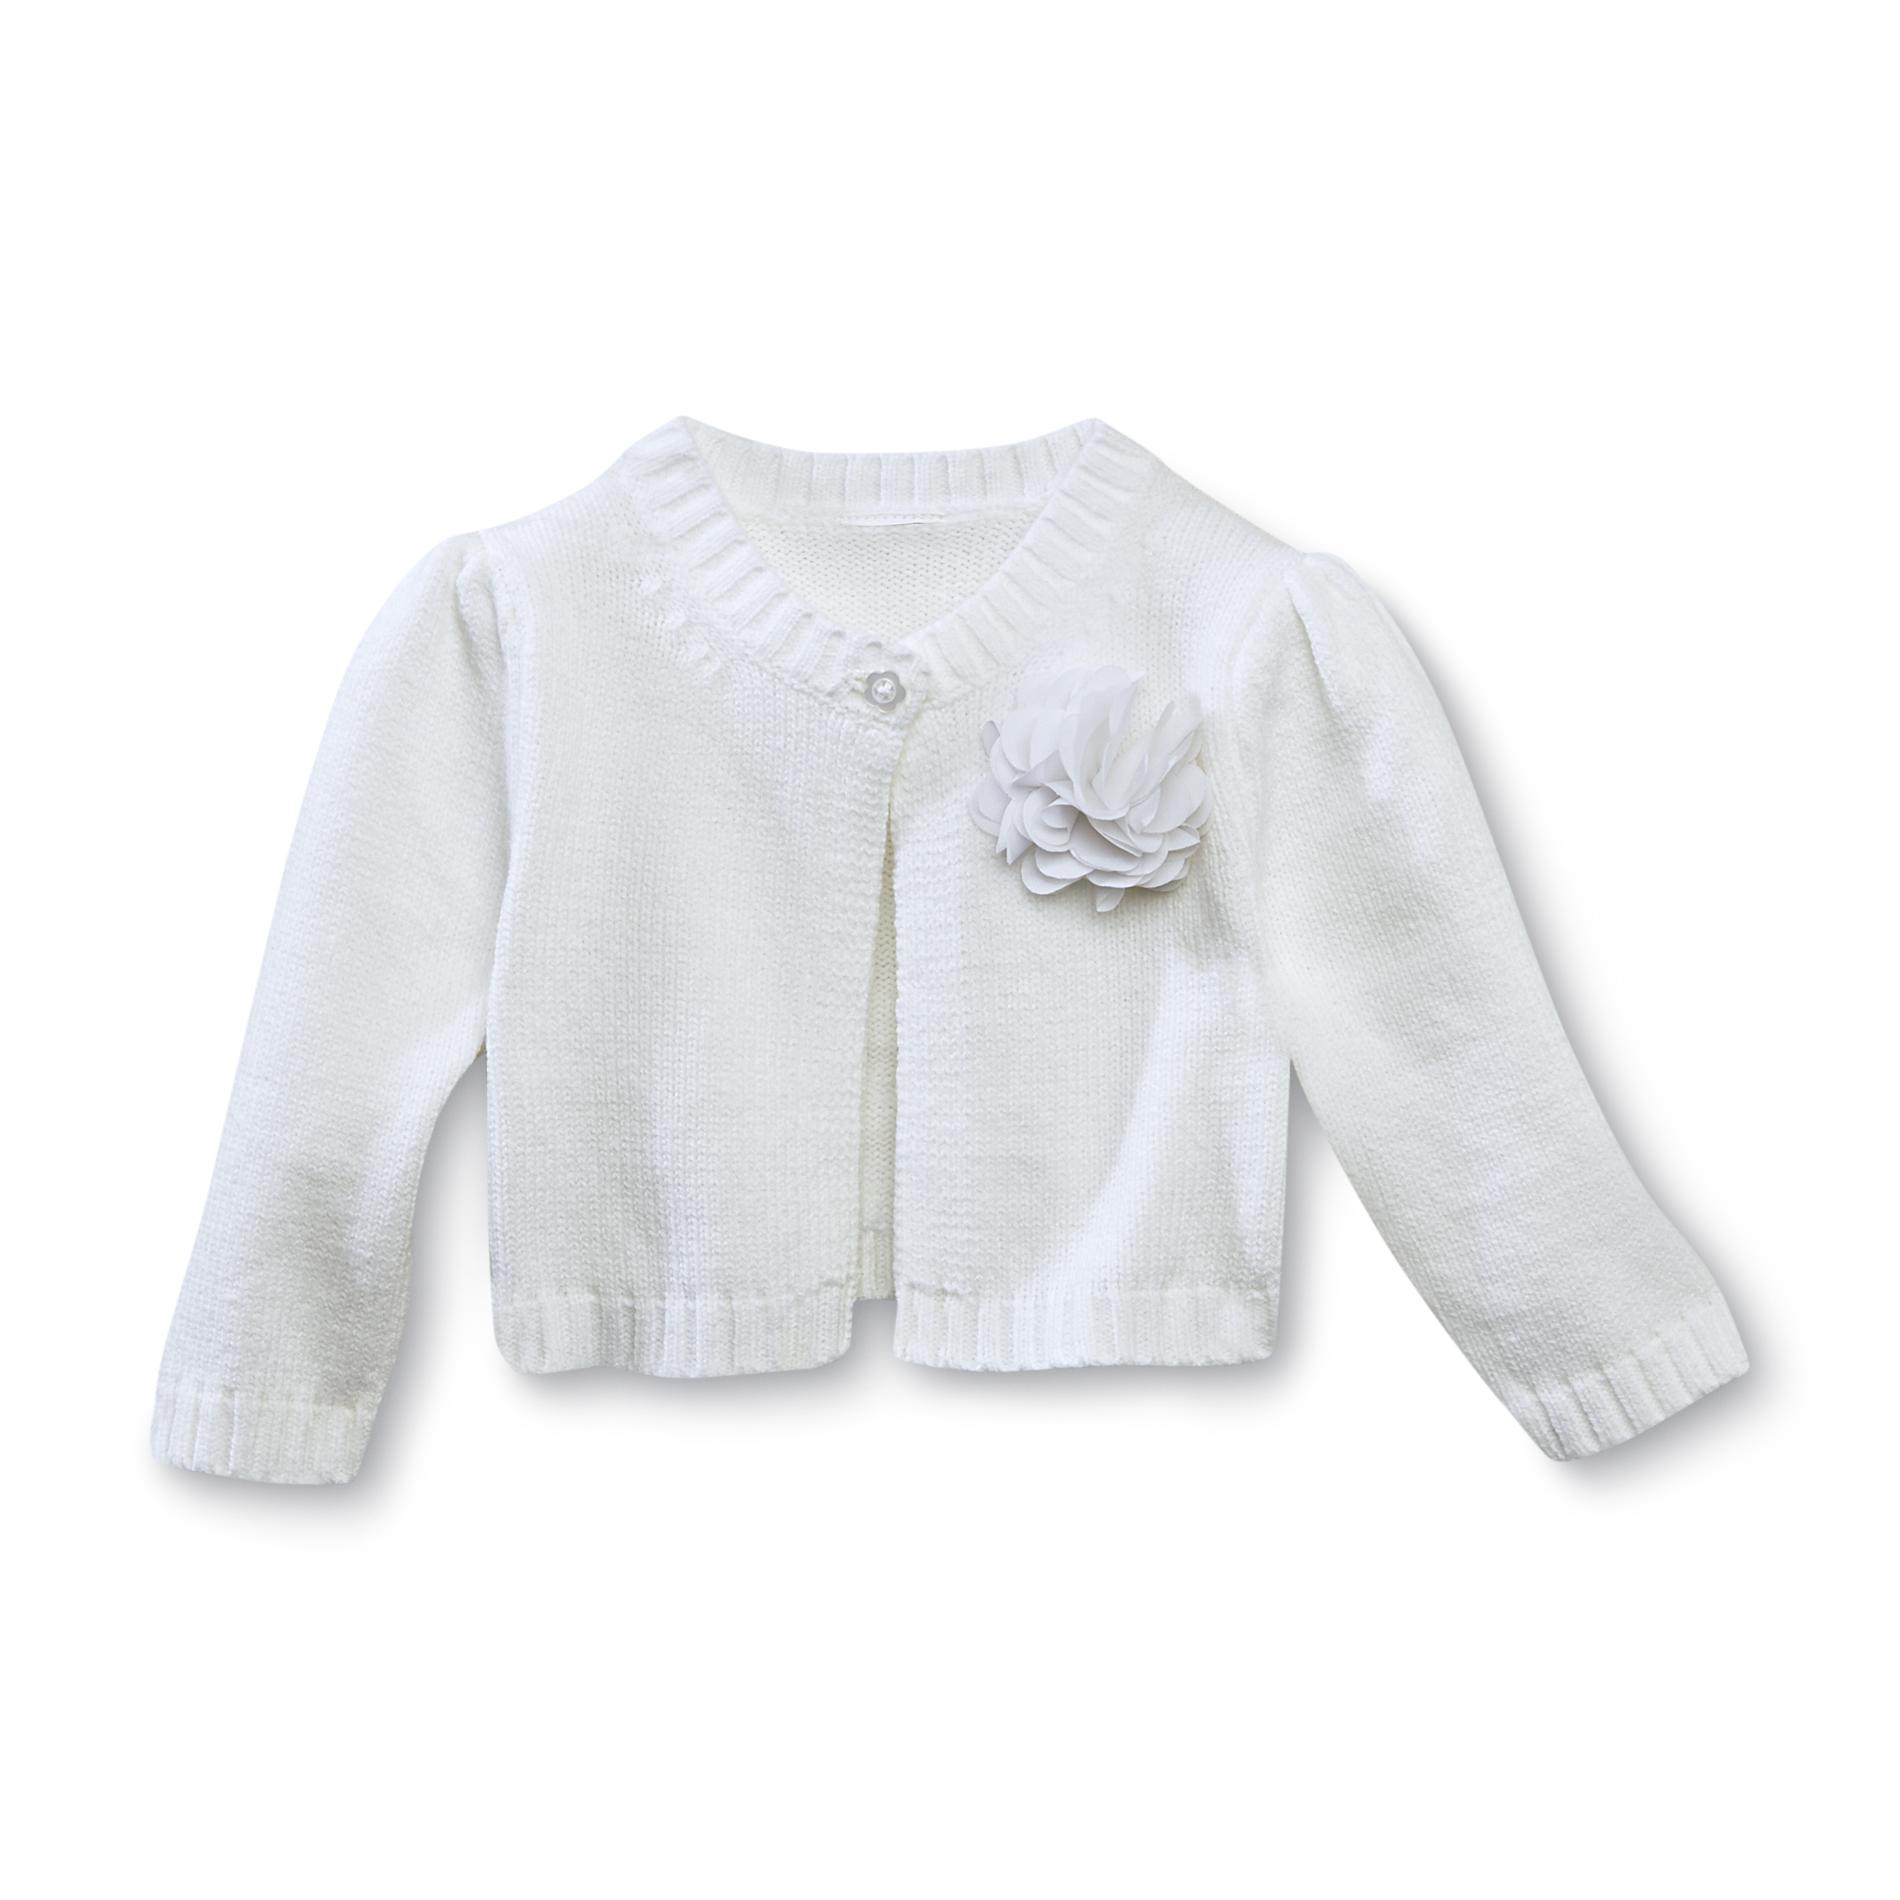 Holiday Editions Newborn Girl's Shrug Sweater